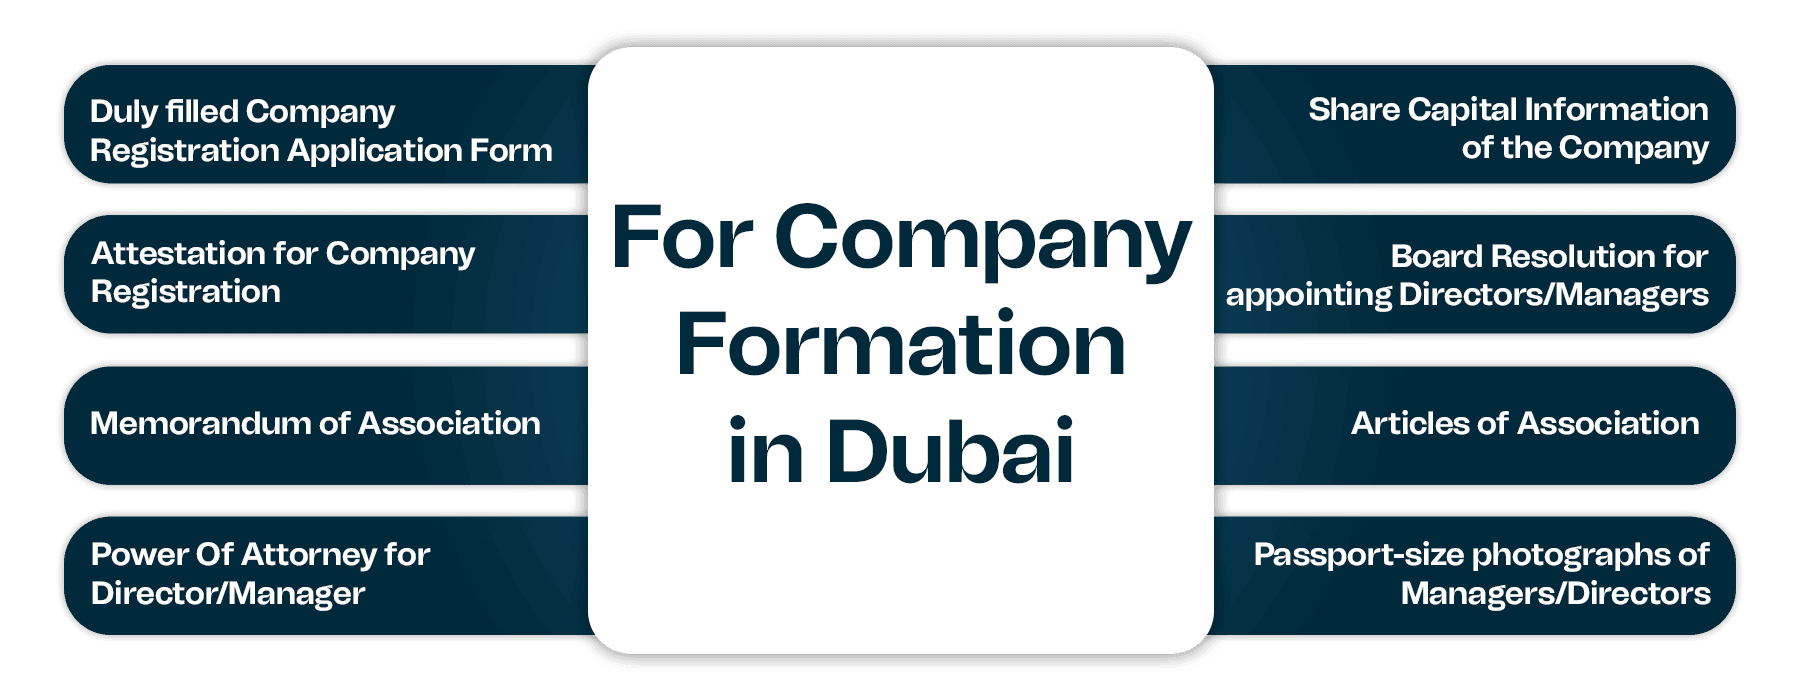 For Company Formation in Dubai